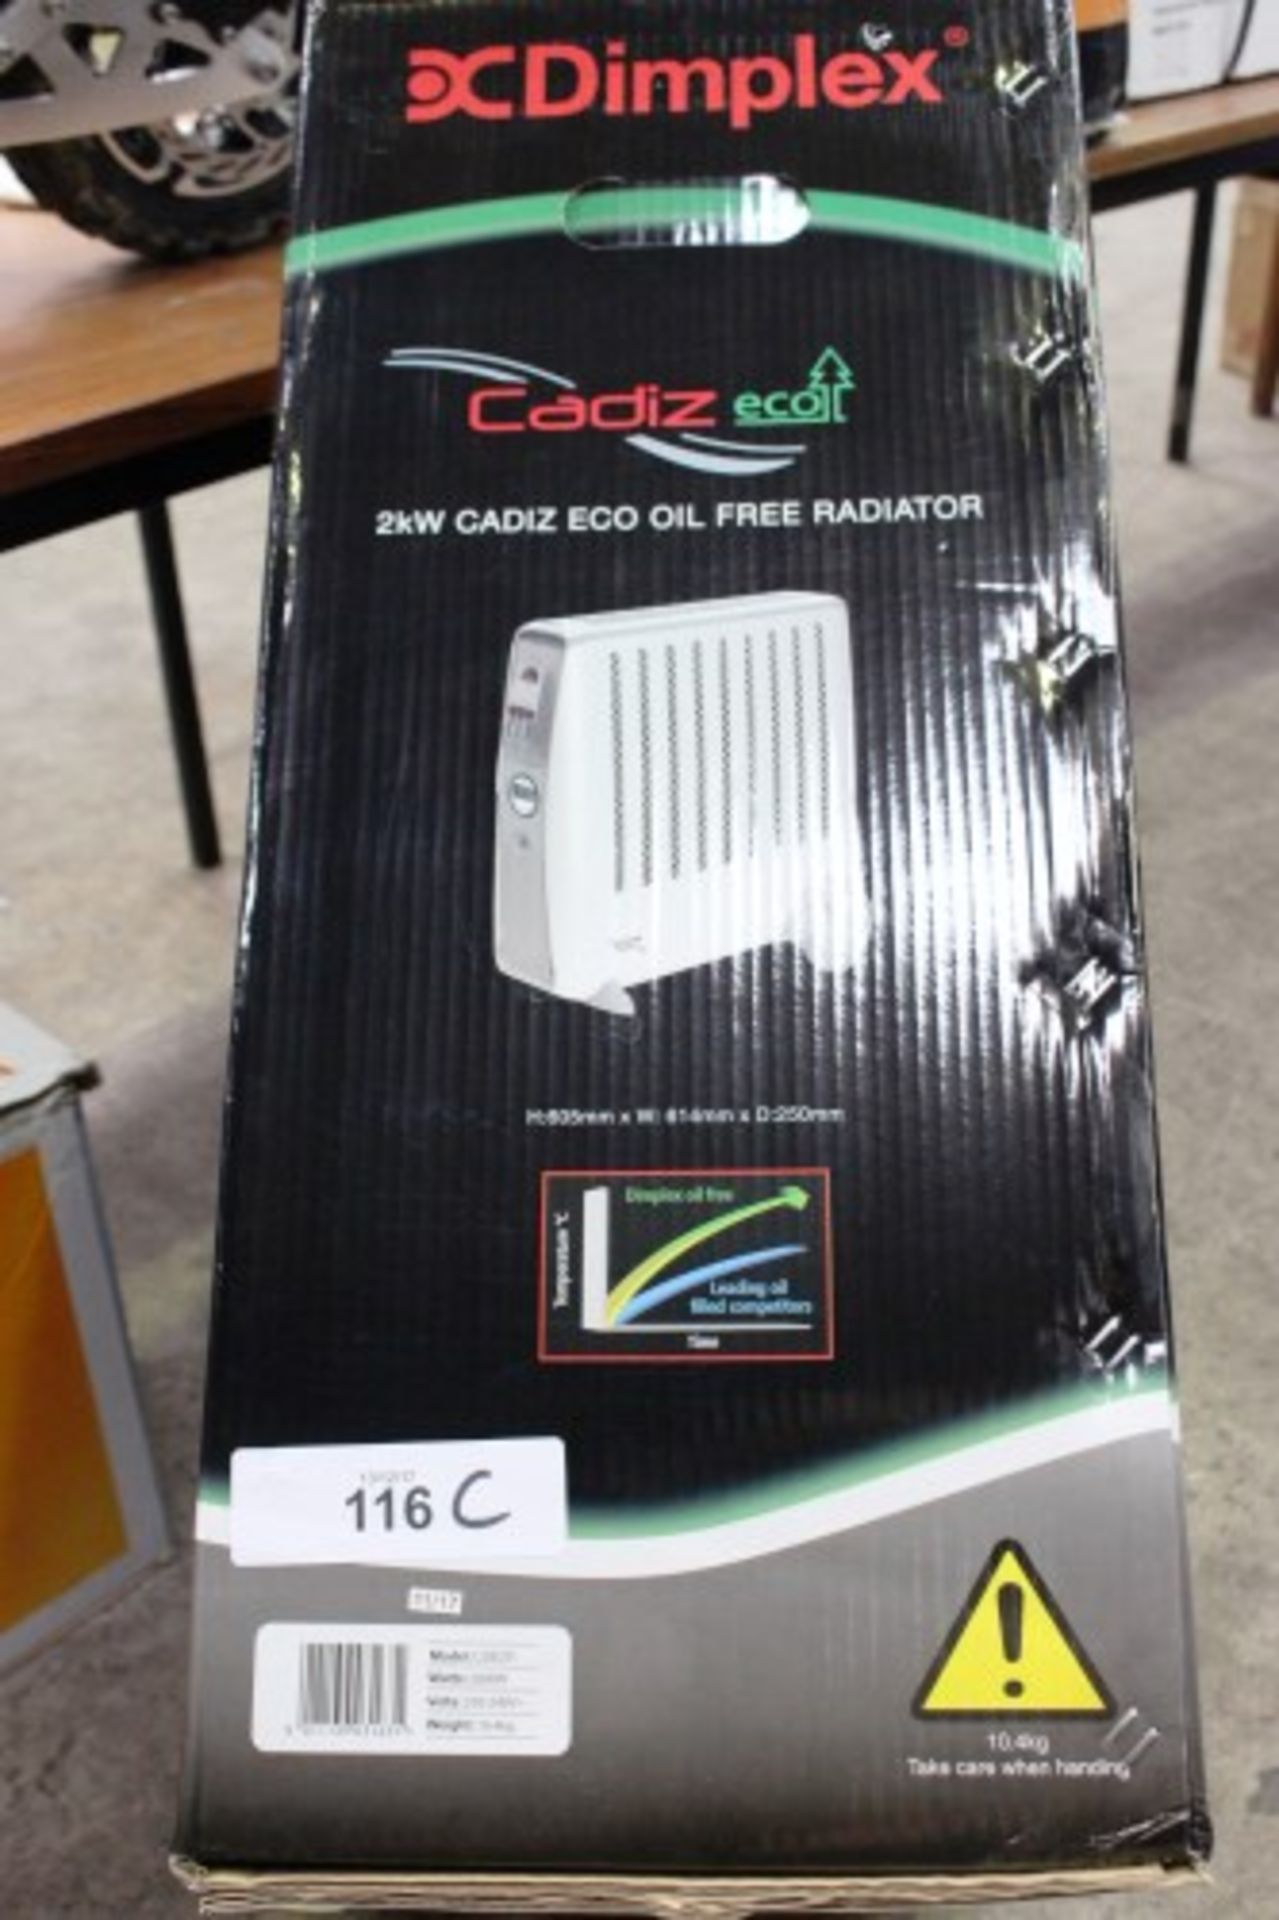 A Dimplex 2KW oil free radiator, Model CDE2TI - Sealed new in box (EST 29)